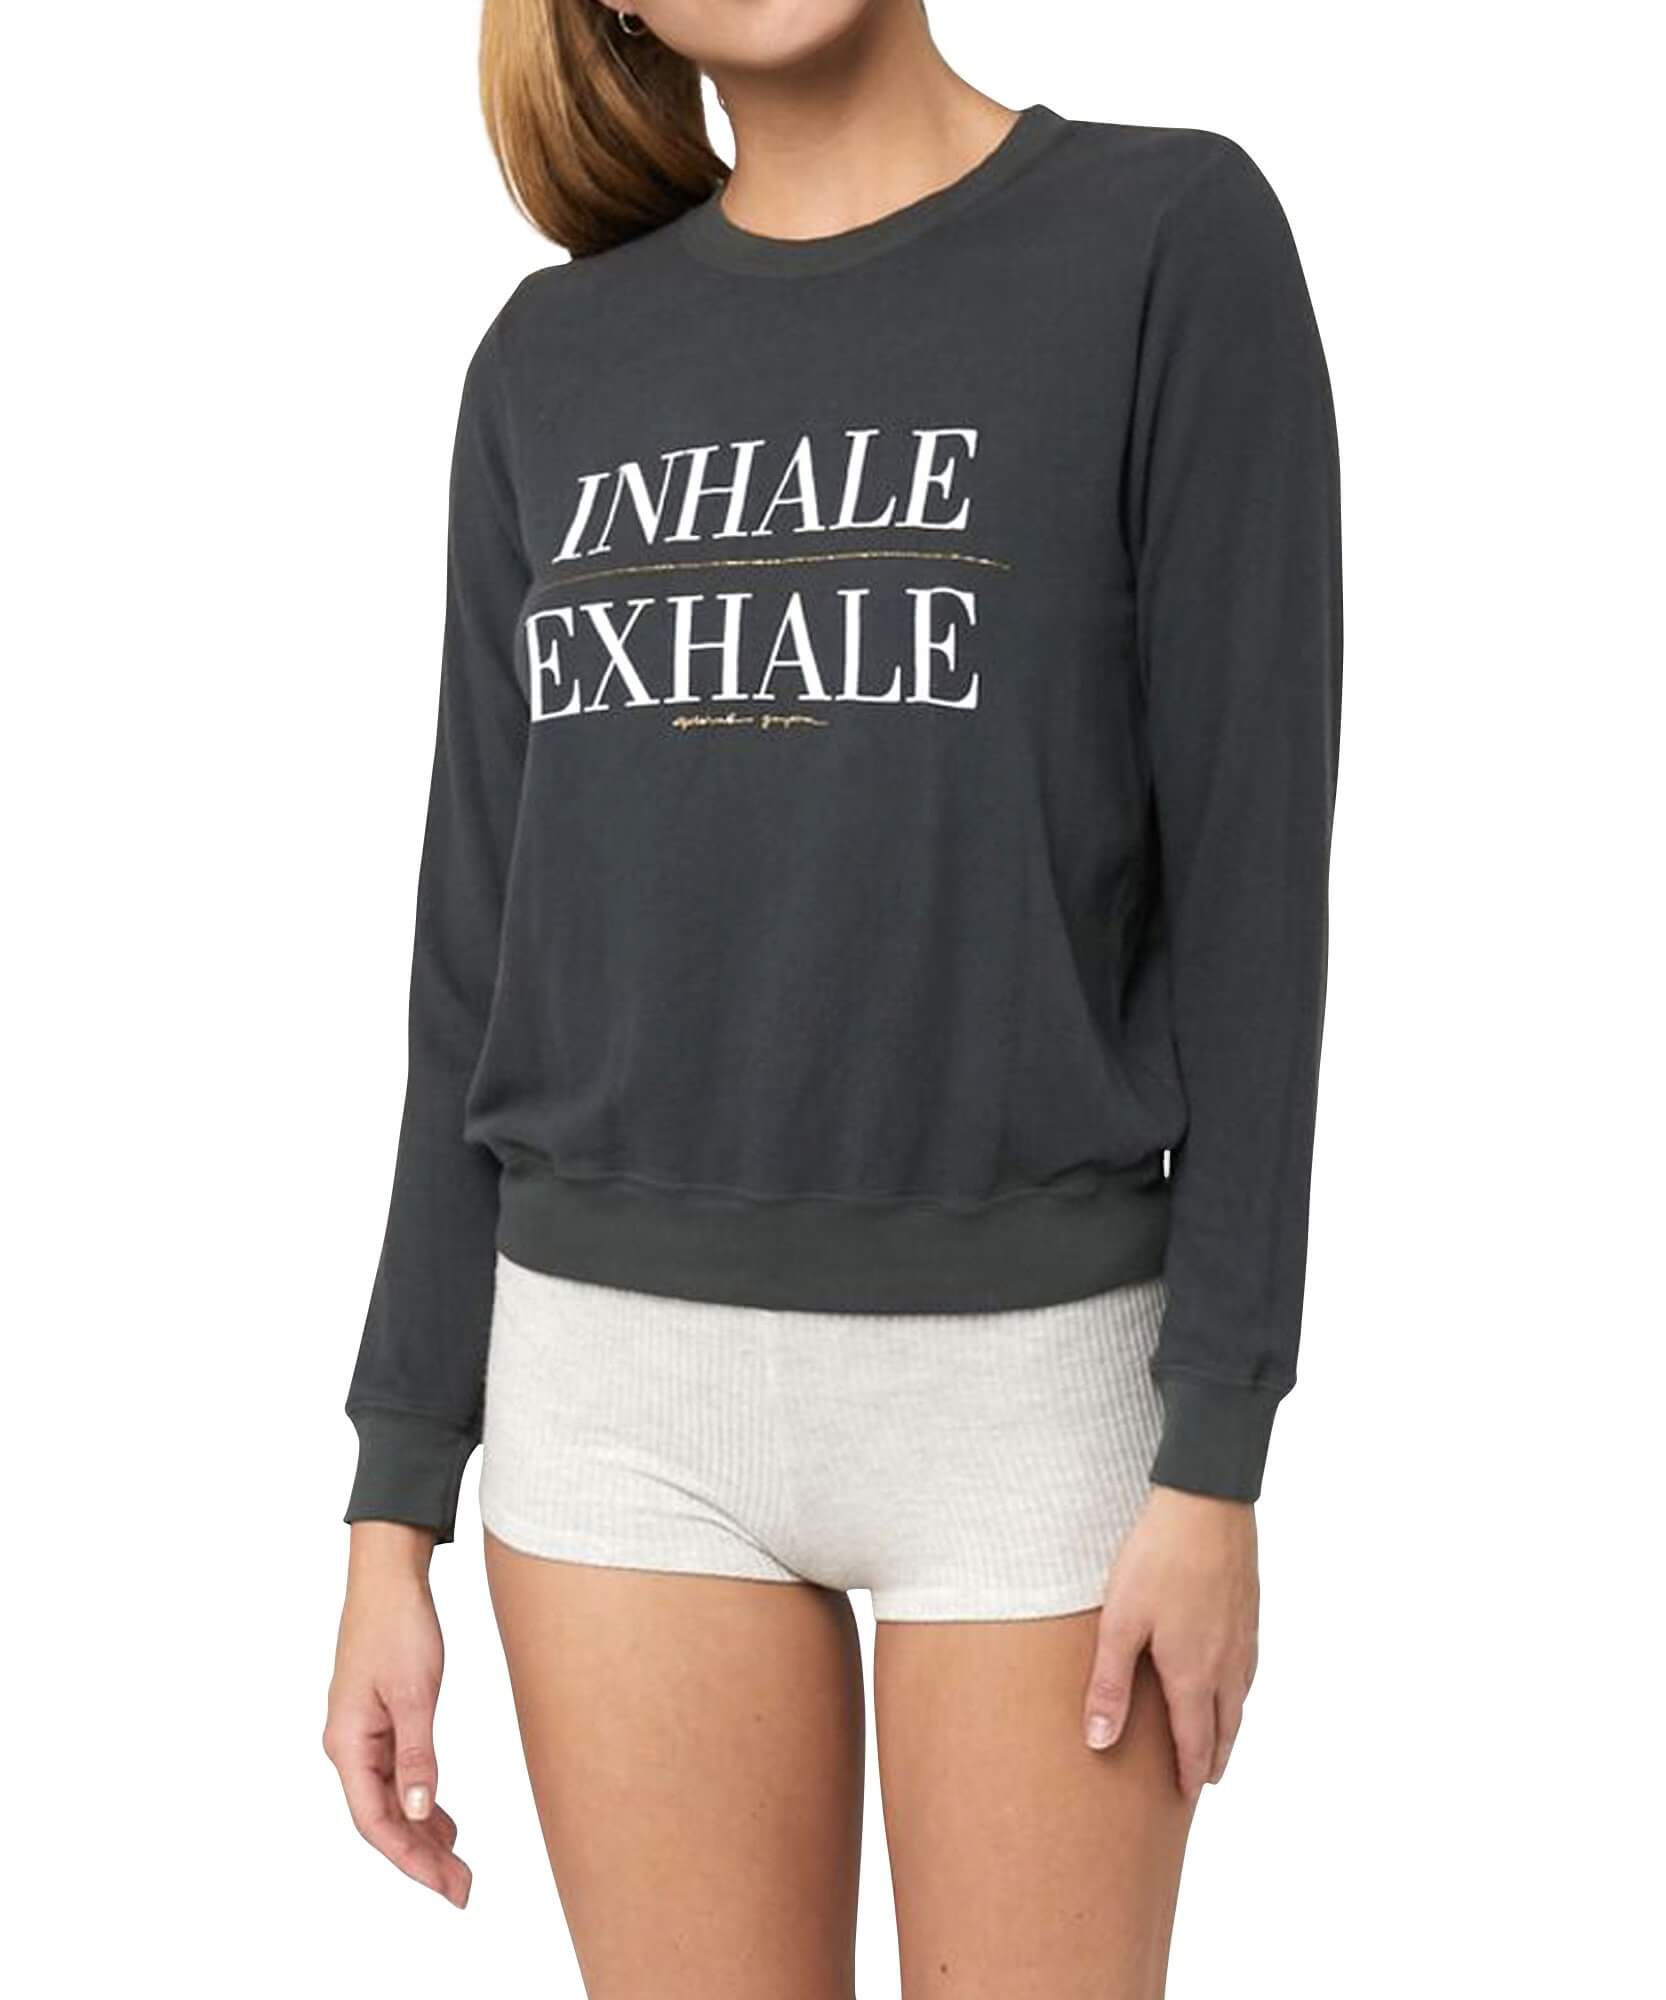 Inhale Exhale Crew Neck Sweatshirt